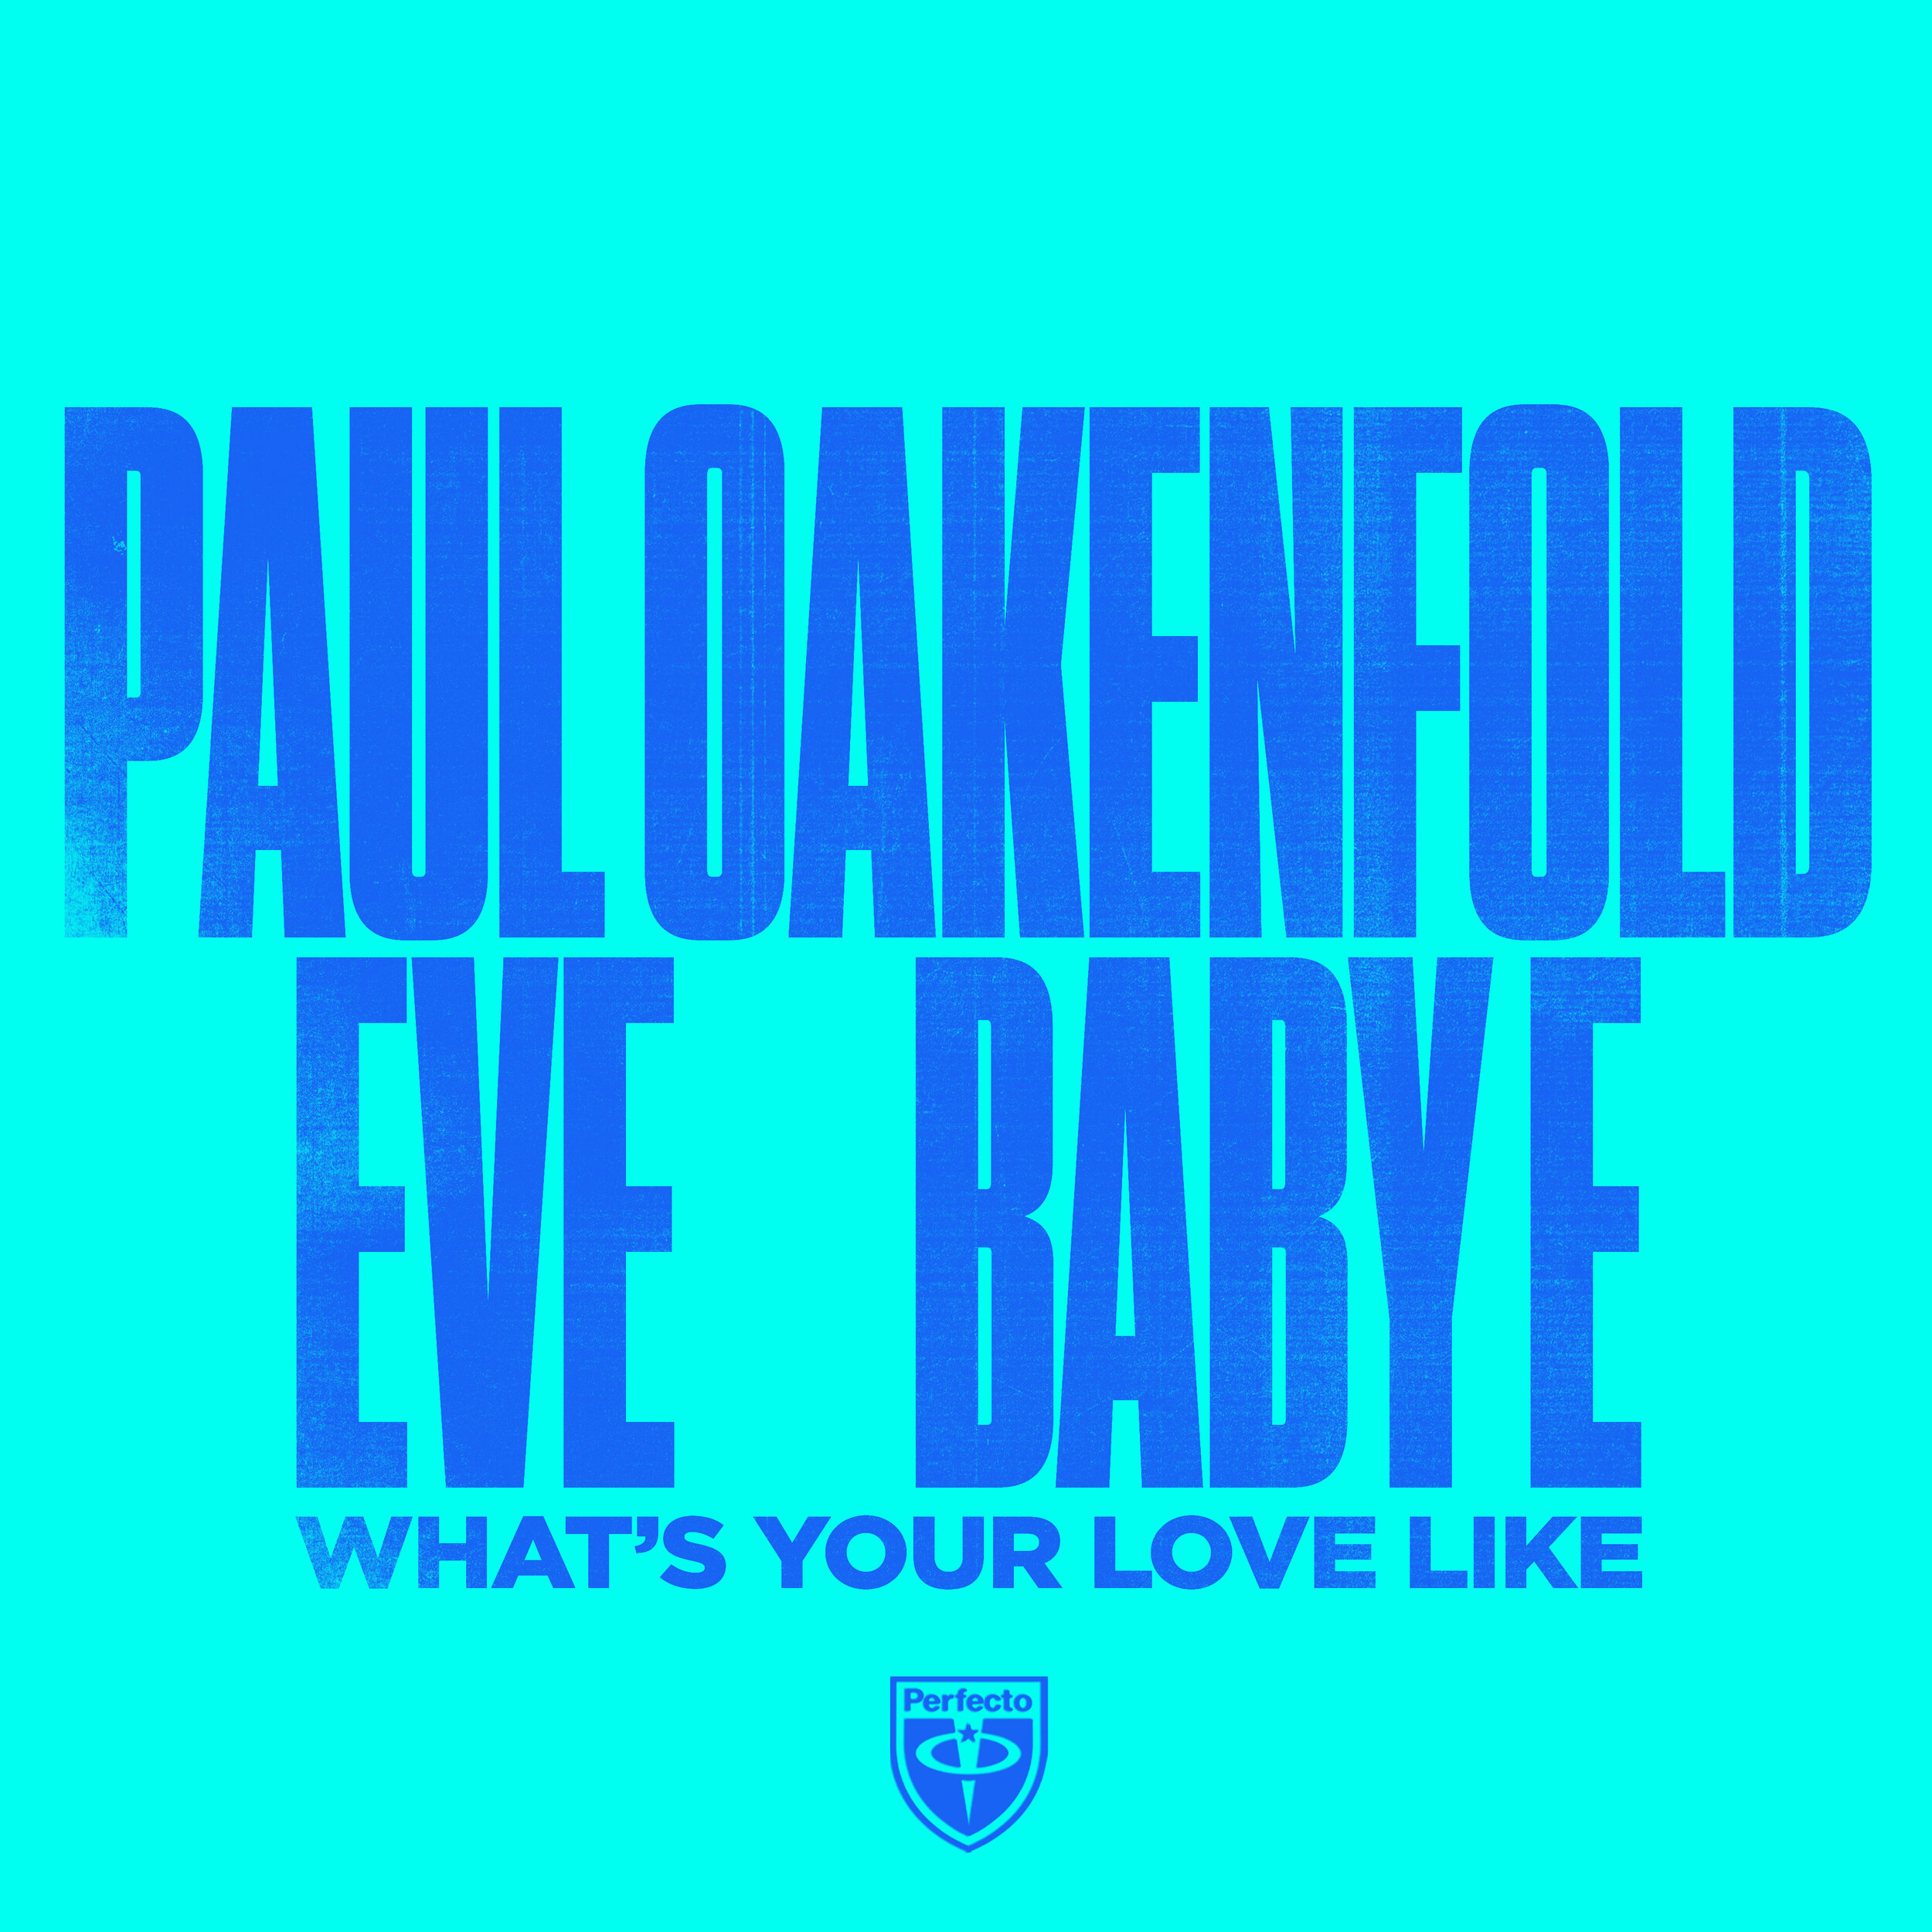 What's Your Love Like - Paul Oakenfold x Eve x Baby E - Artwork.jpg